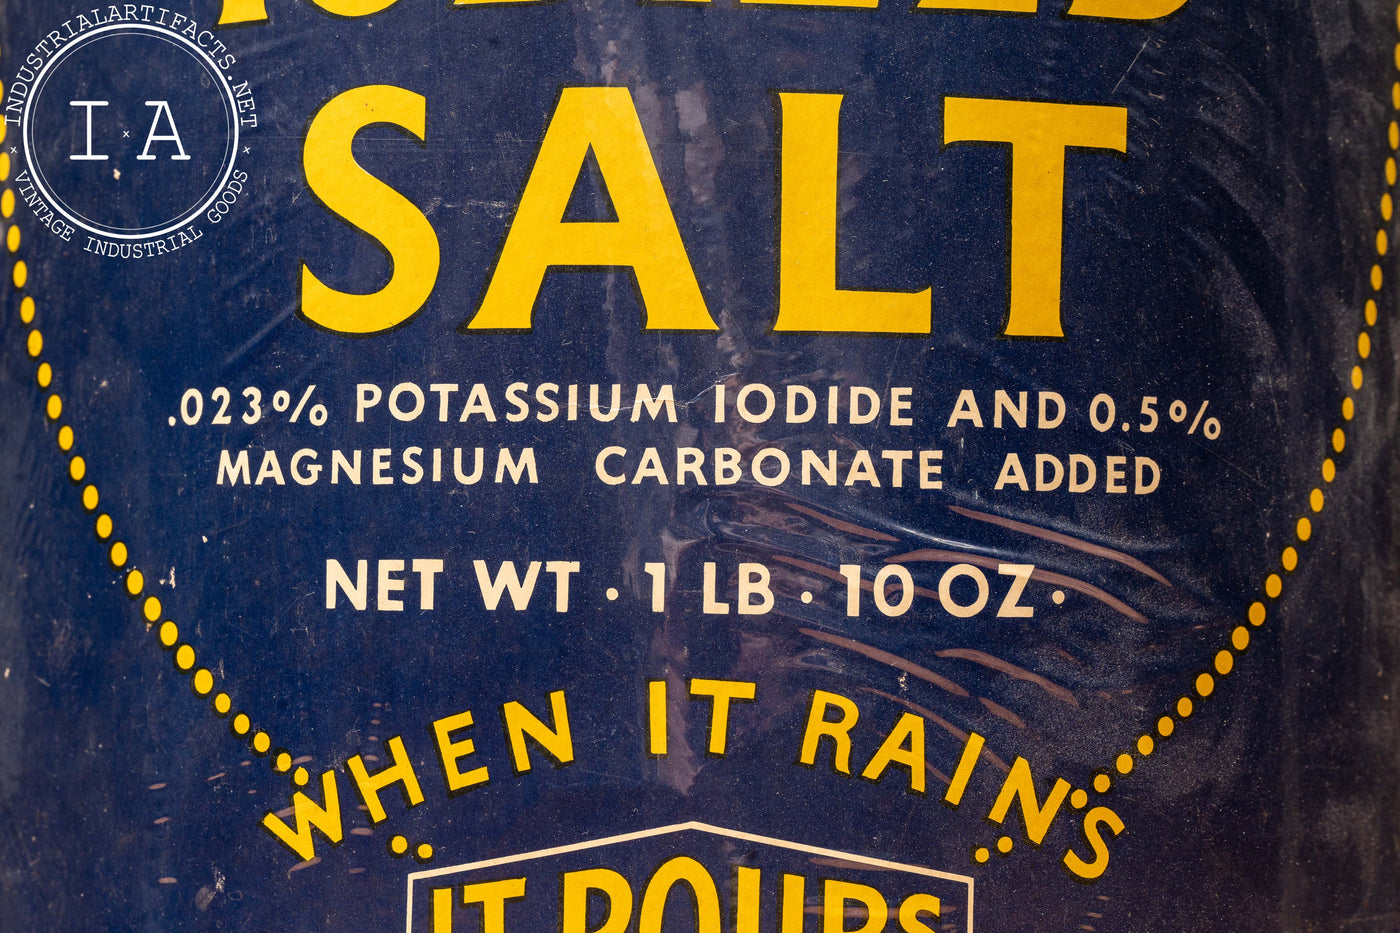 Early Cardboard Morton Salt Store Display